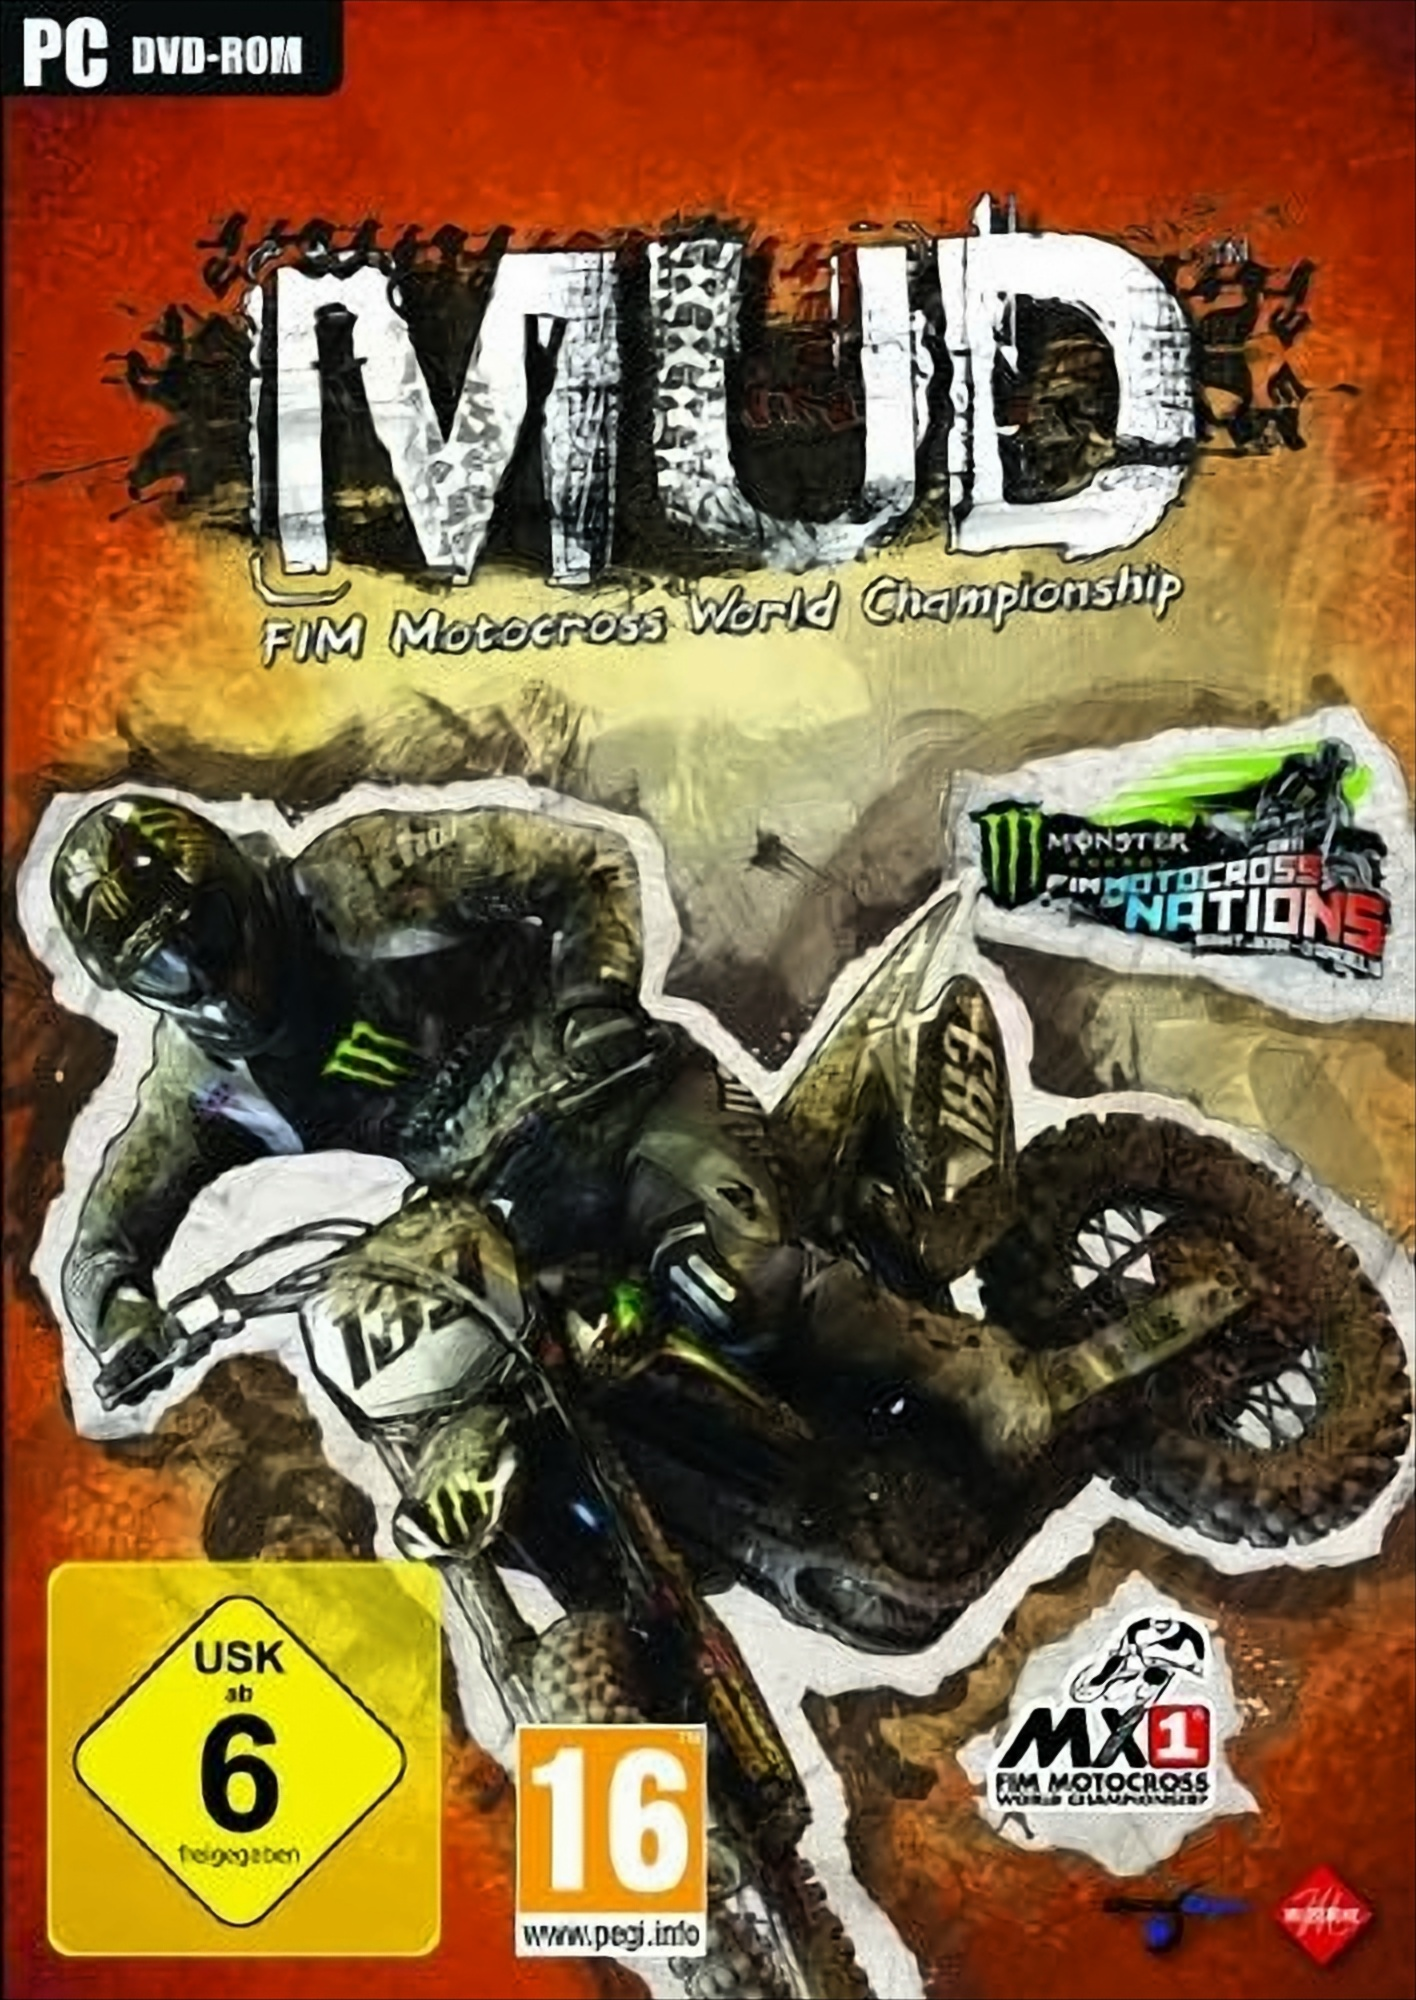 - [PC] - Championship FIM MUD Motocross World